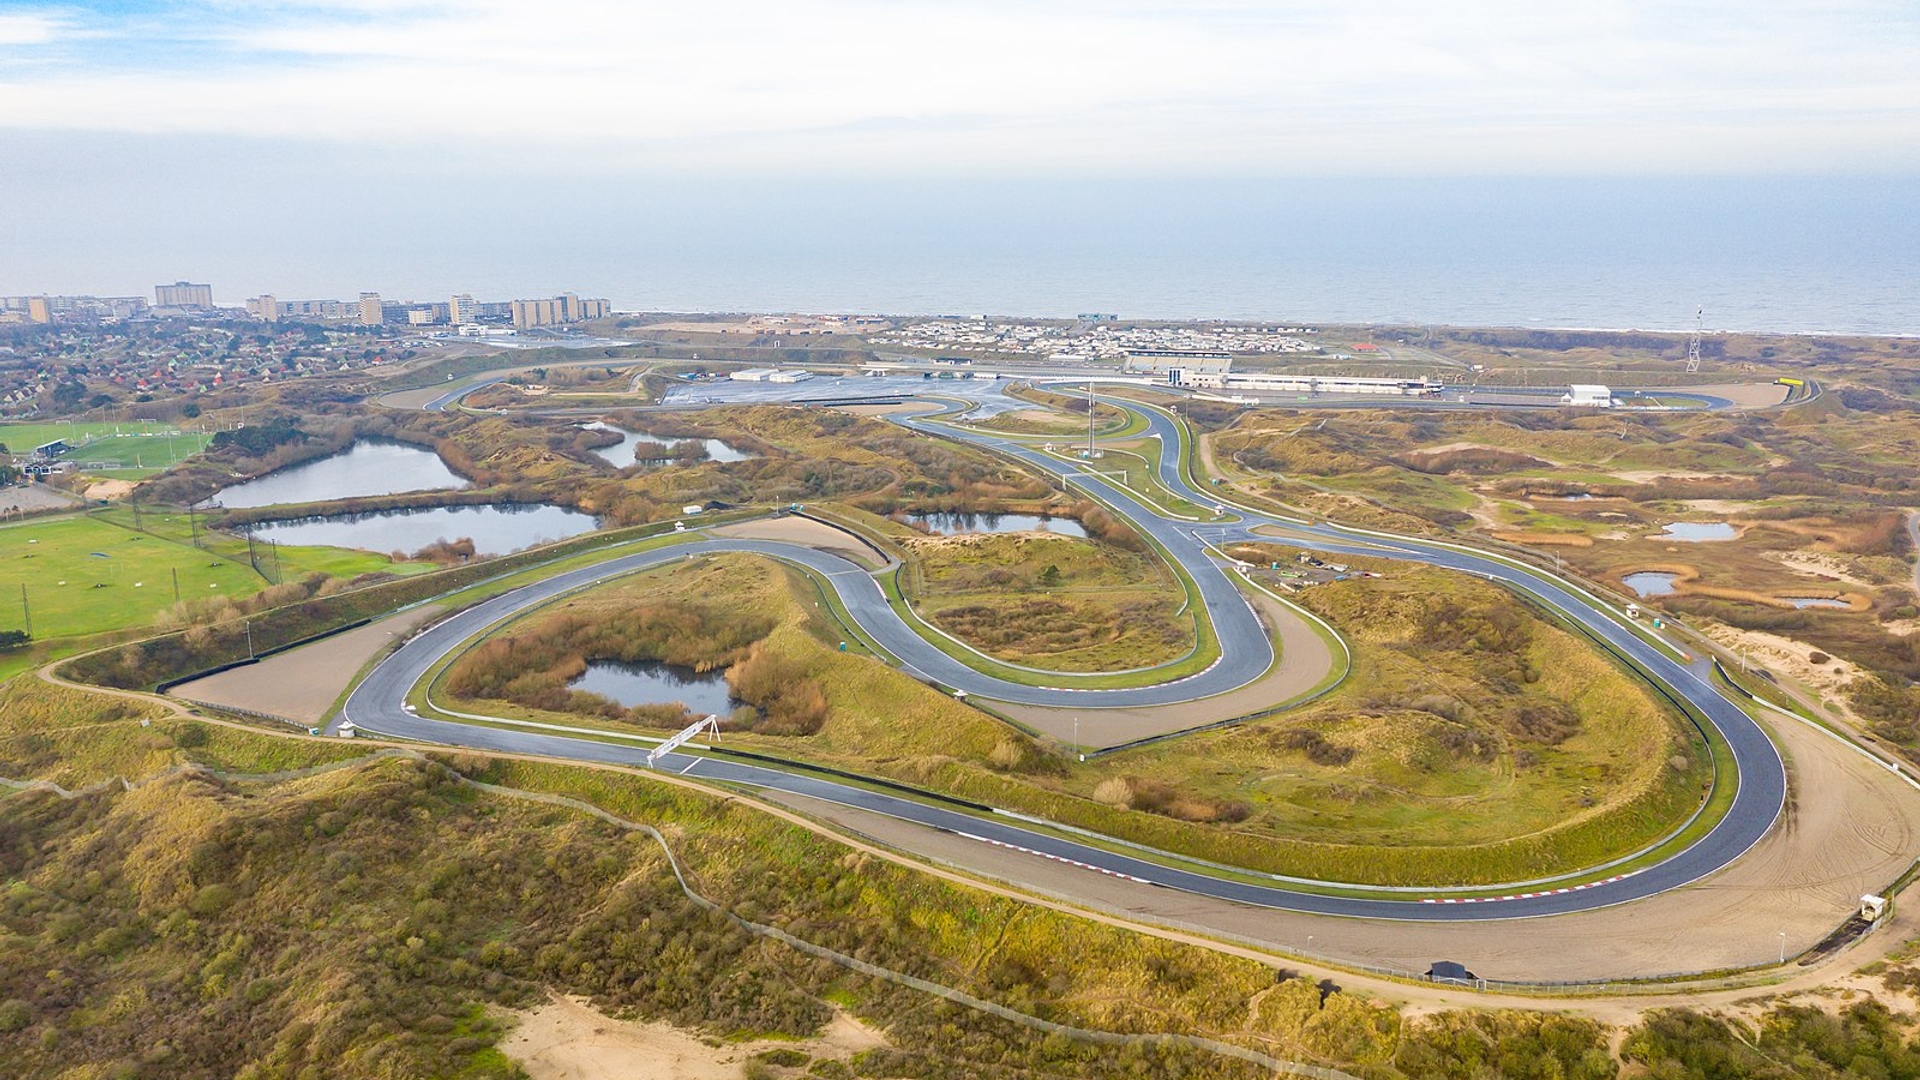 1600px-Circuit_Zandvoort_motorsport_race_track_in_the_Netherlands_46940292845